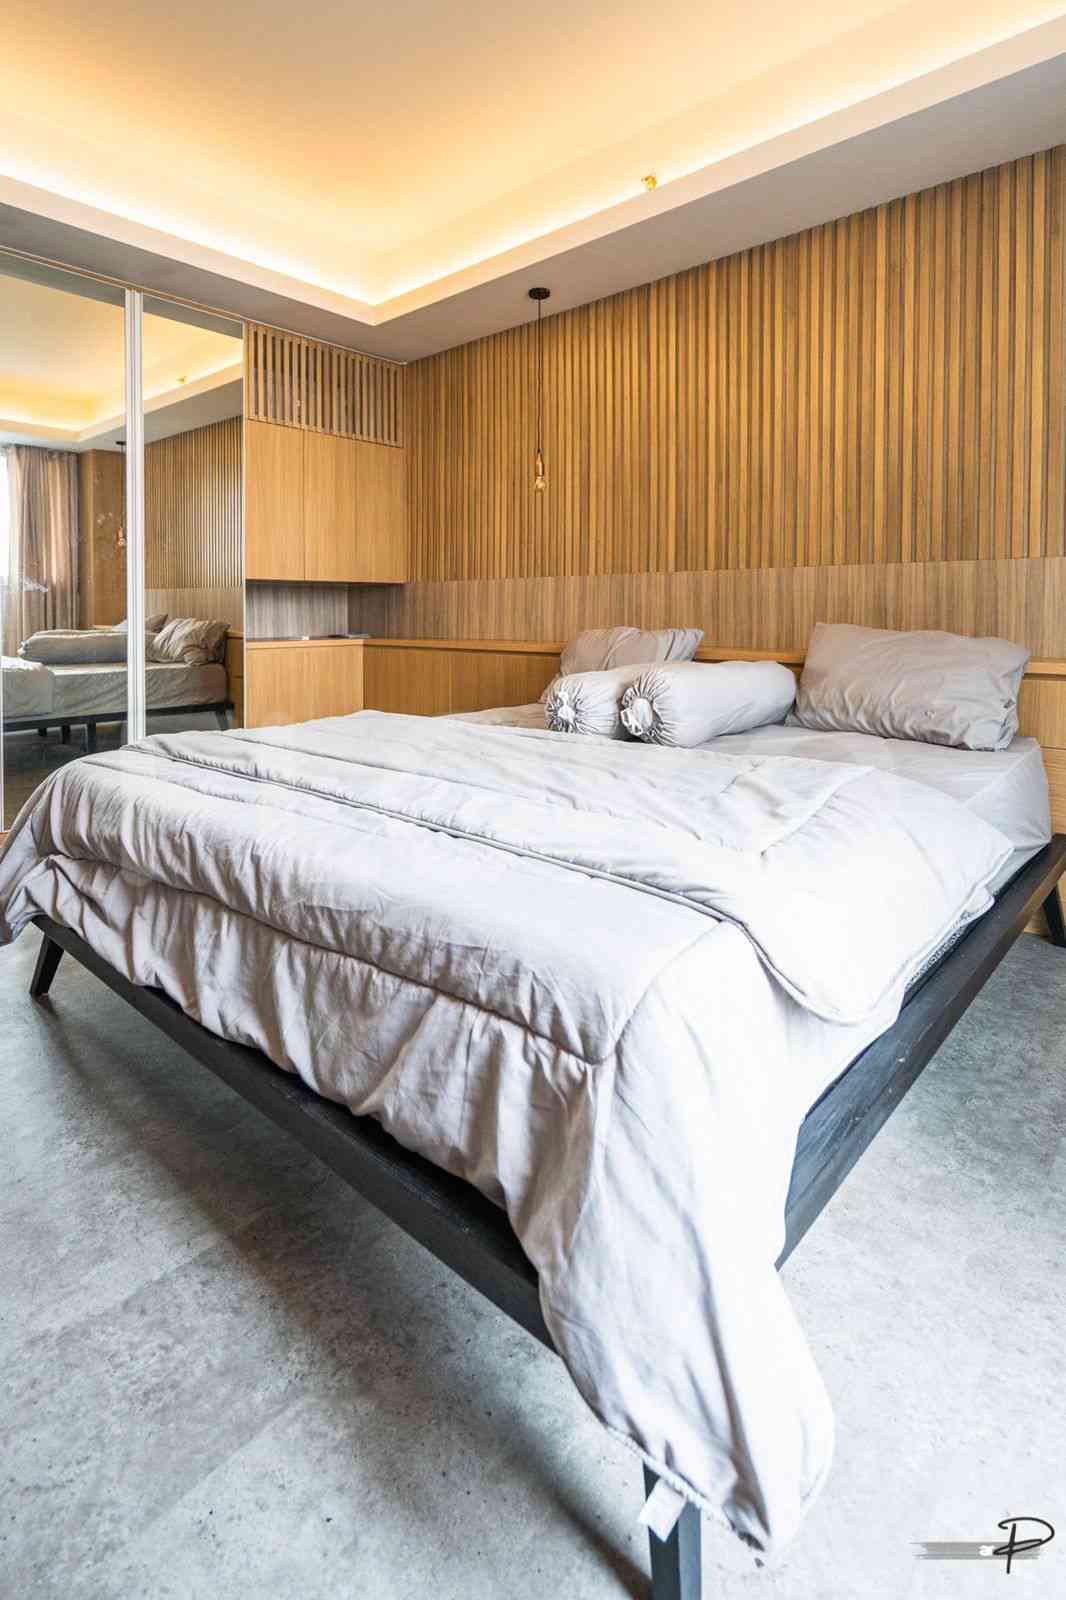 2 Bedroom on 20th Floor for Rent in Kemang Village Residence - fke7b0 1